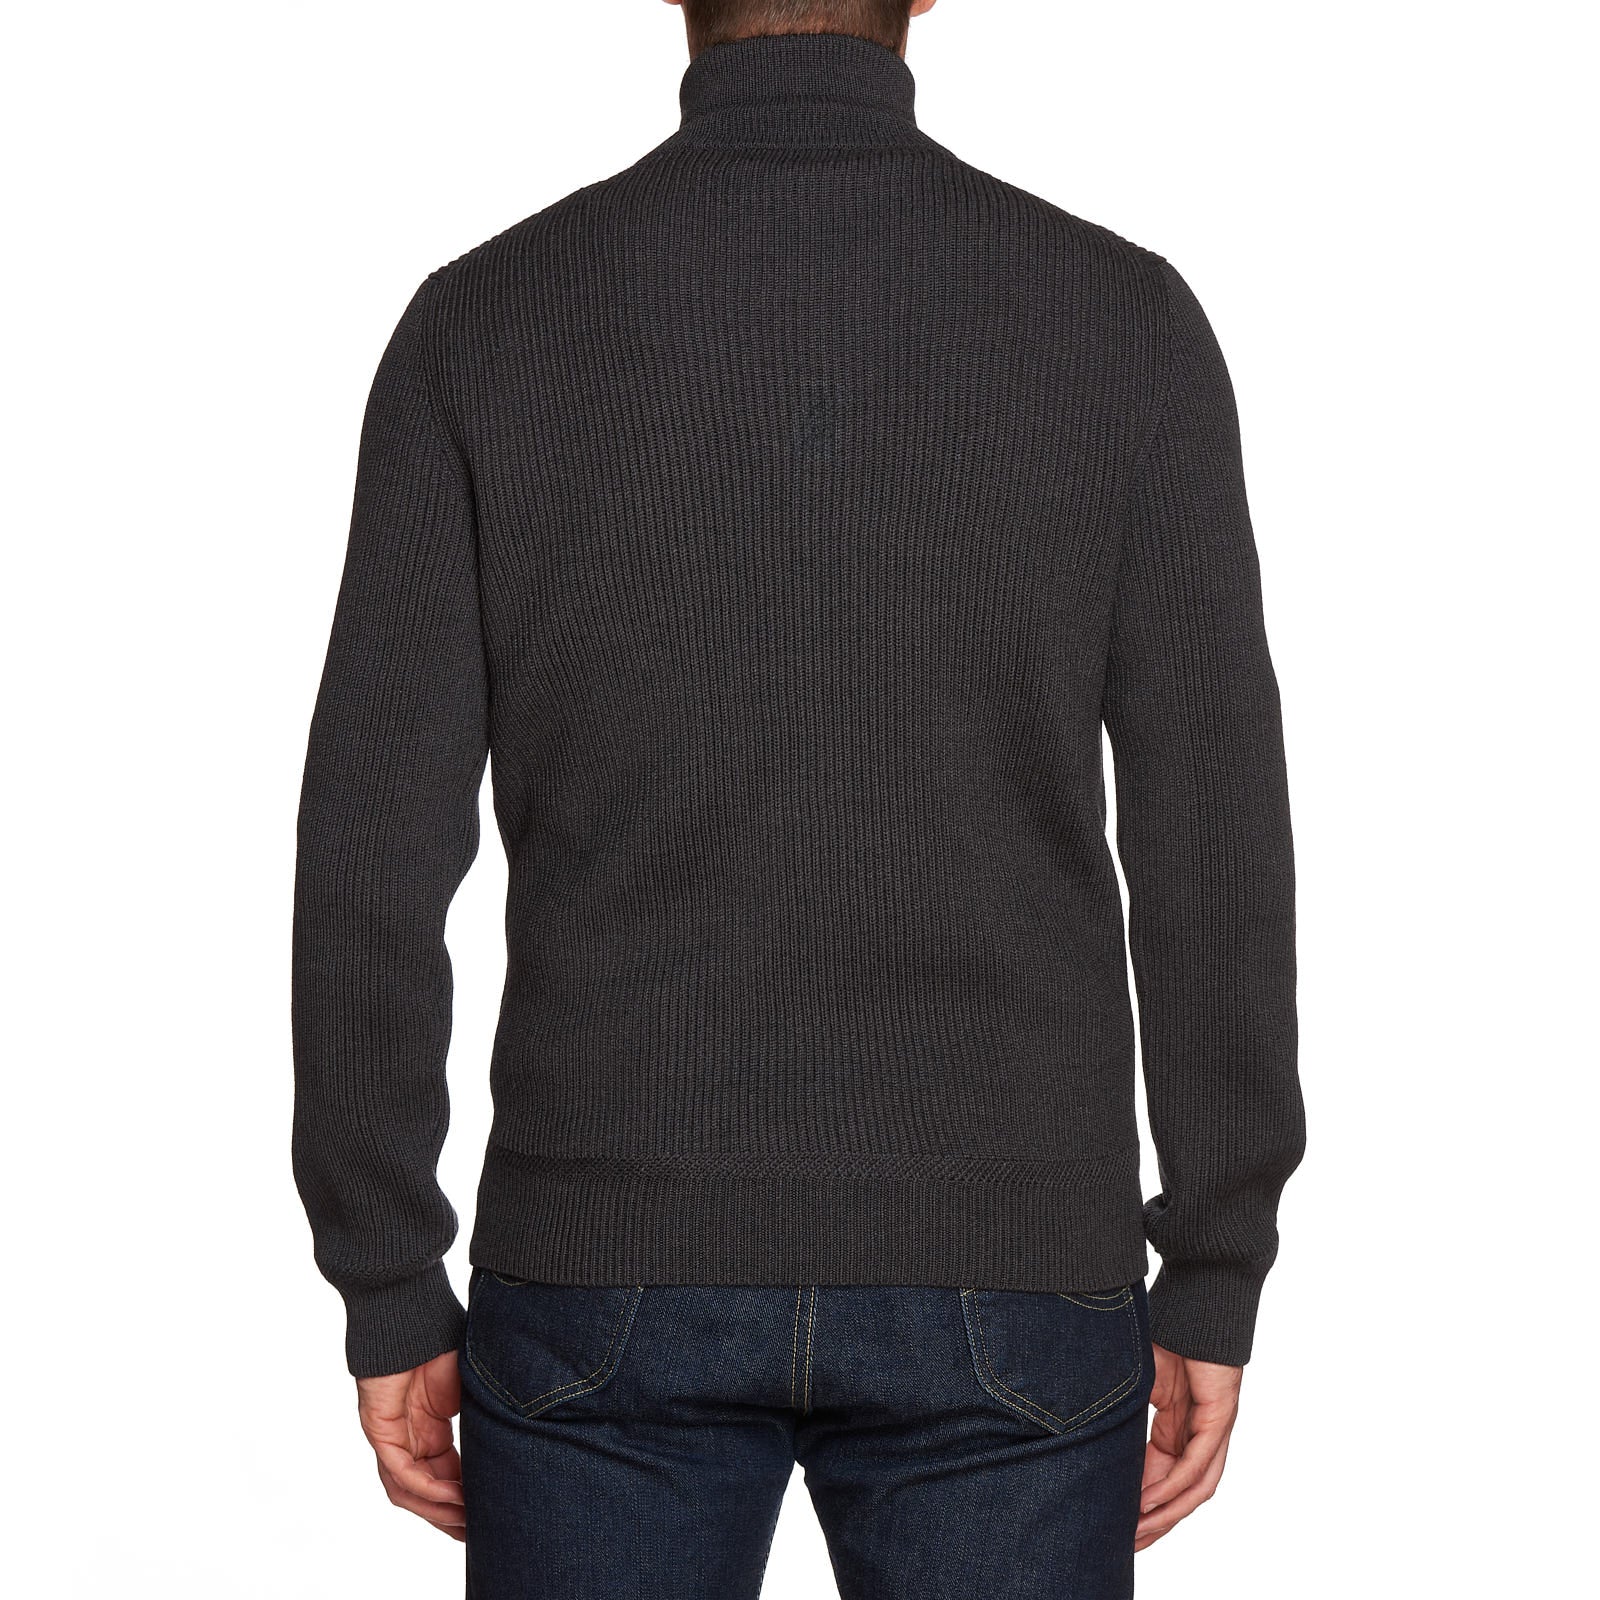 BERLUTI Paris Gray Wool Knit Cardigan Sweater with Deerskin Details EU 50 NEW US M BERLUTI